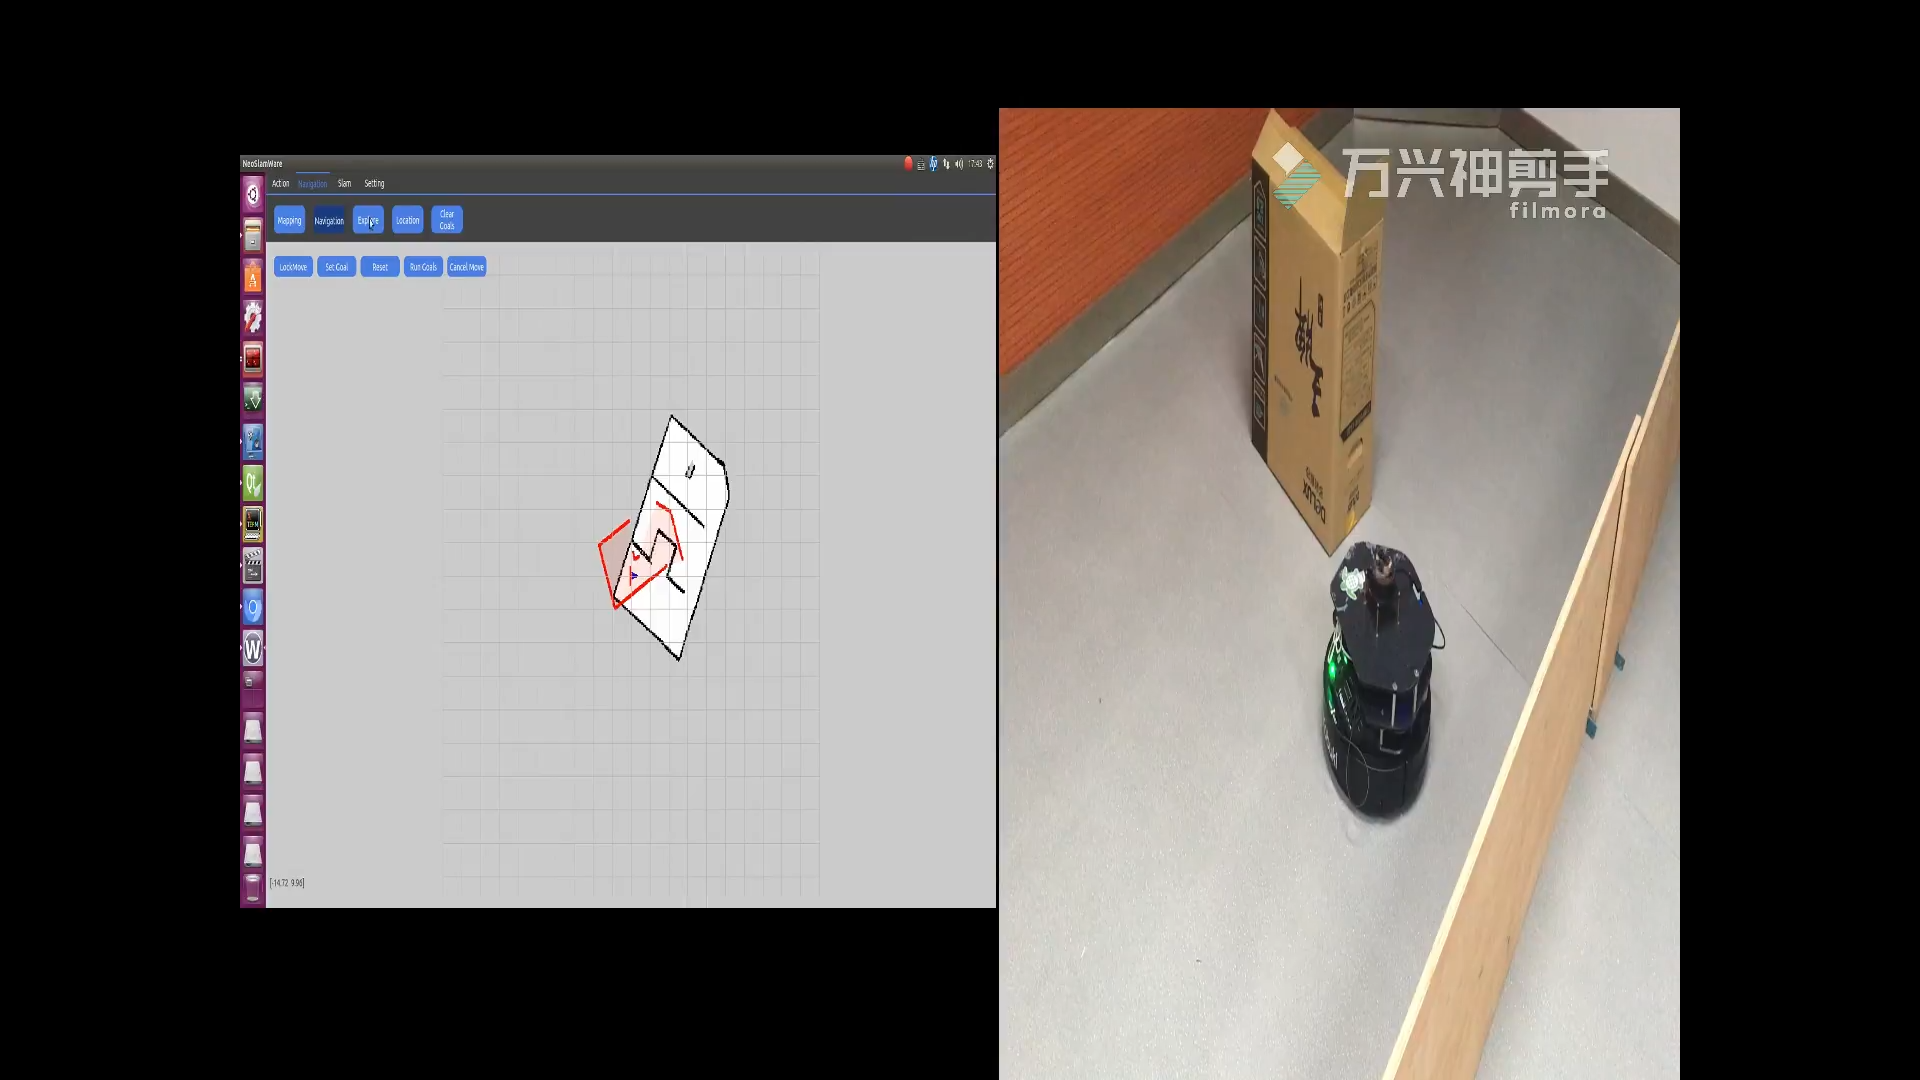 Robot self-localization and autonomous navigation in lab